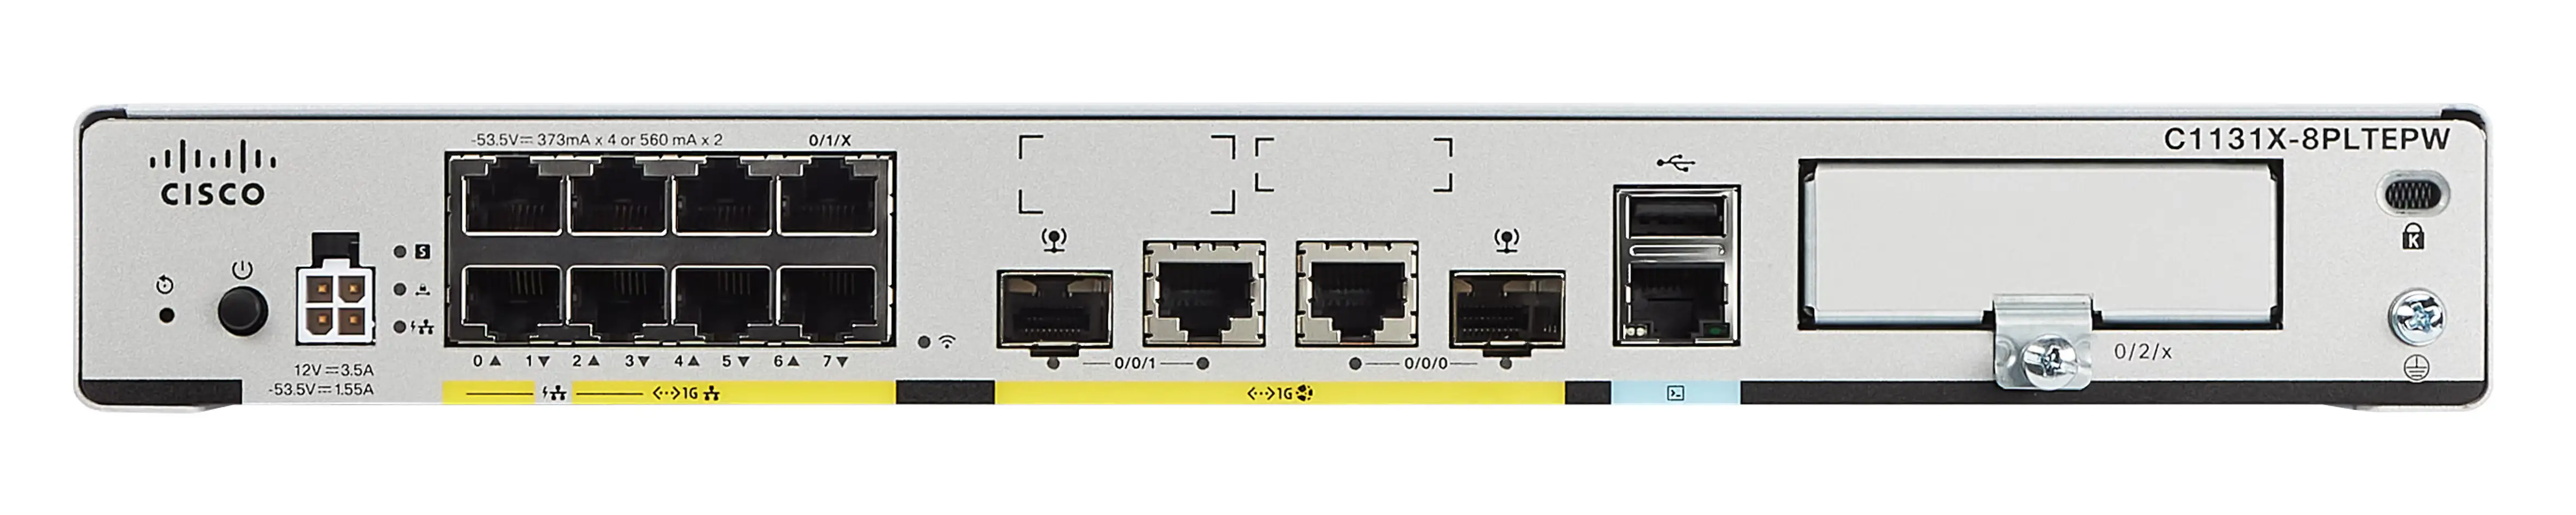 Cisco C1131-8PLTEPWE - Router